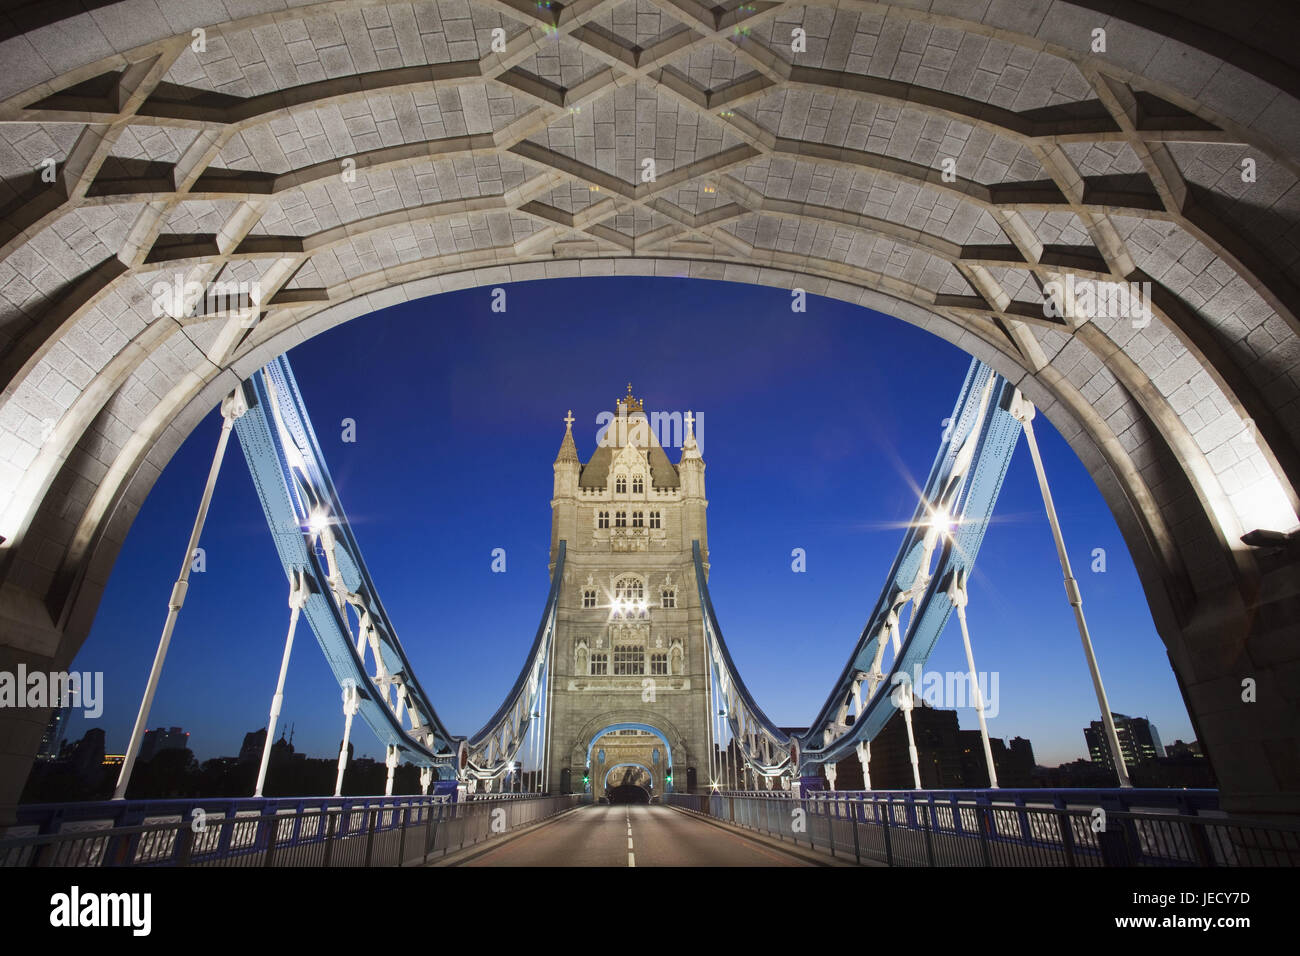 England, London, Tower Bridge, night photography, town, architecture, structure, landmark, monument, bridge, street, illuminateds, evening, night, balance bridge, Stock Photo